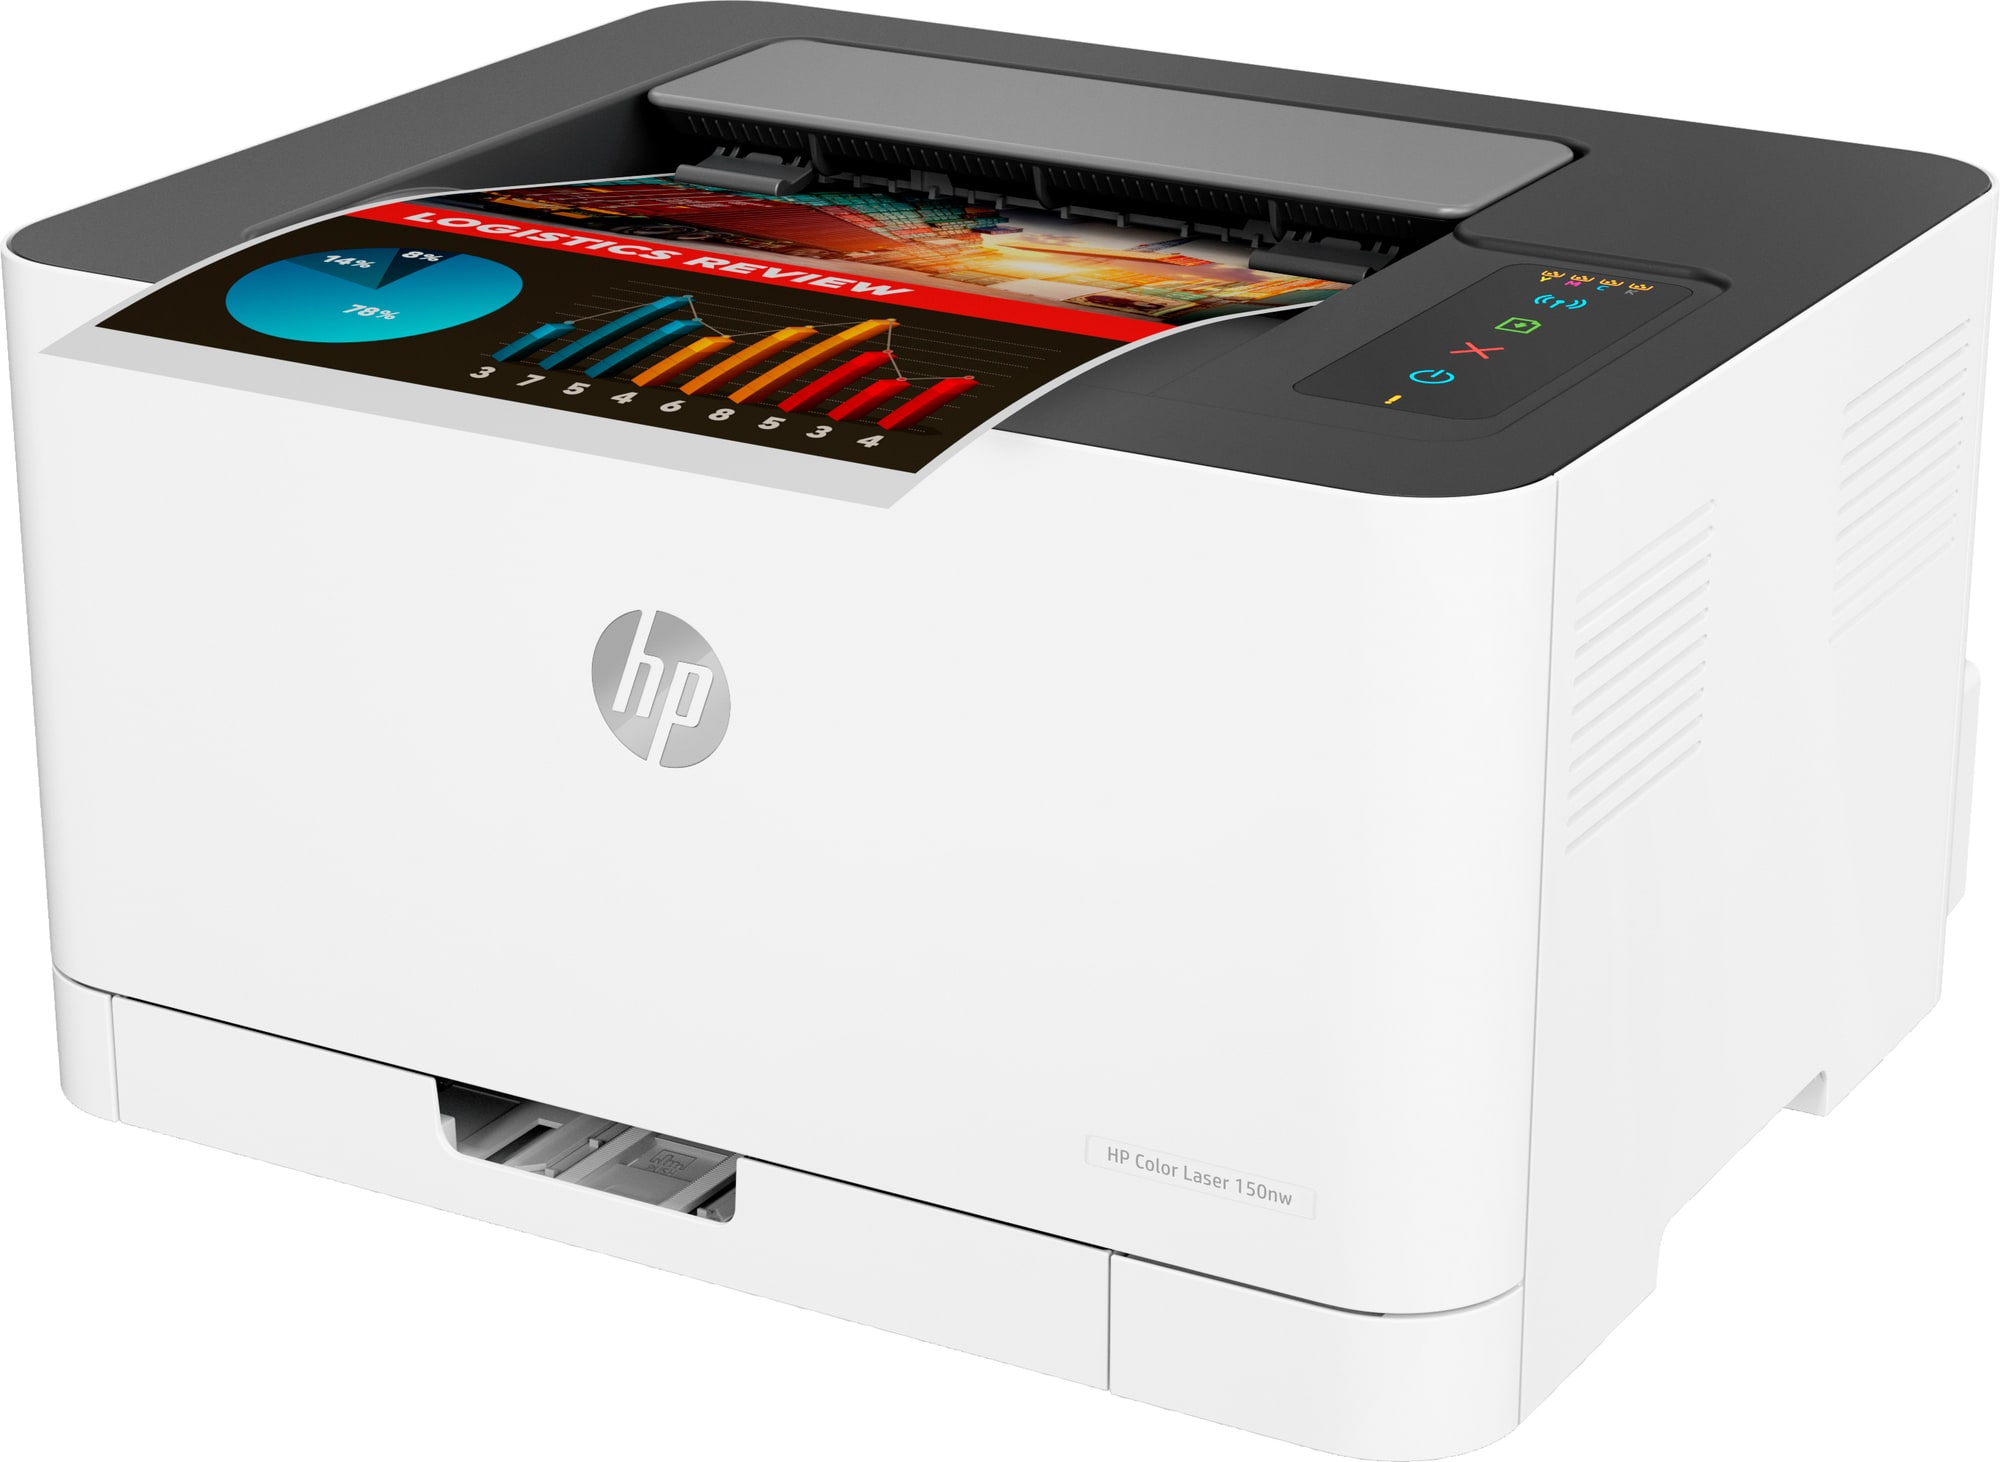 HP Color Laser 150nw värilasertulostin - Gigantti verkkokauppa